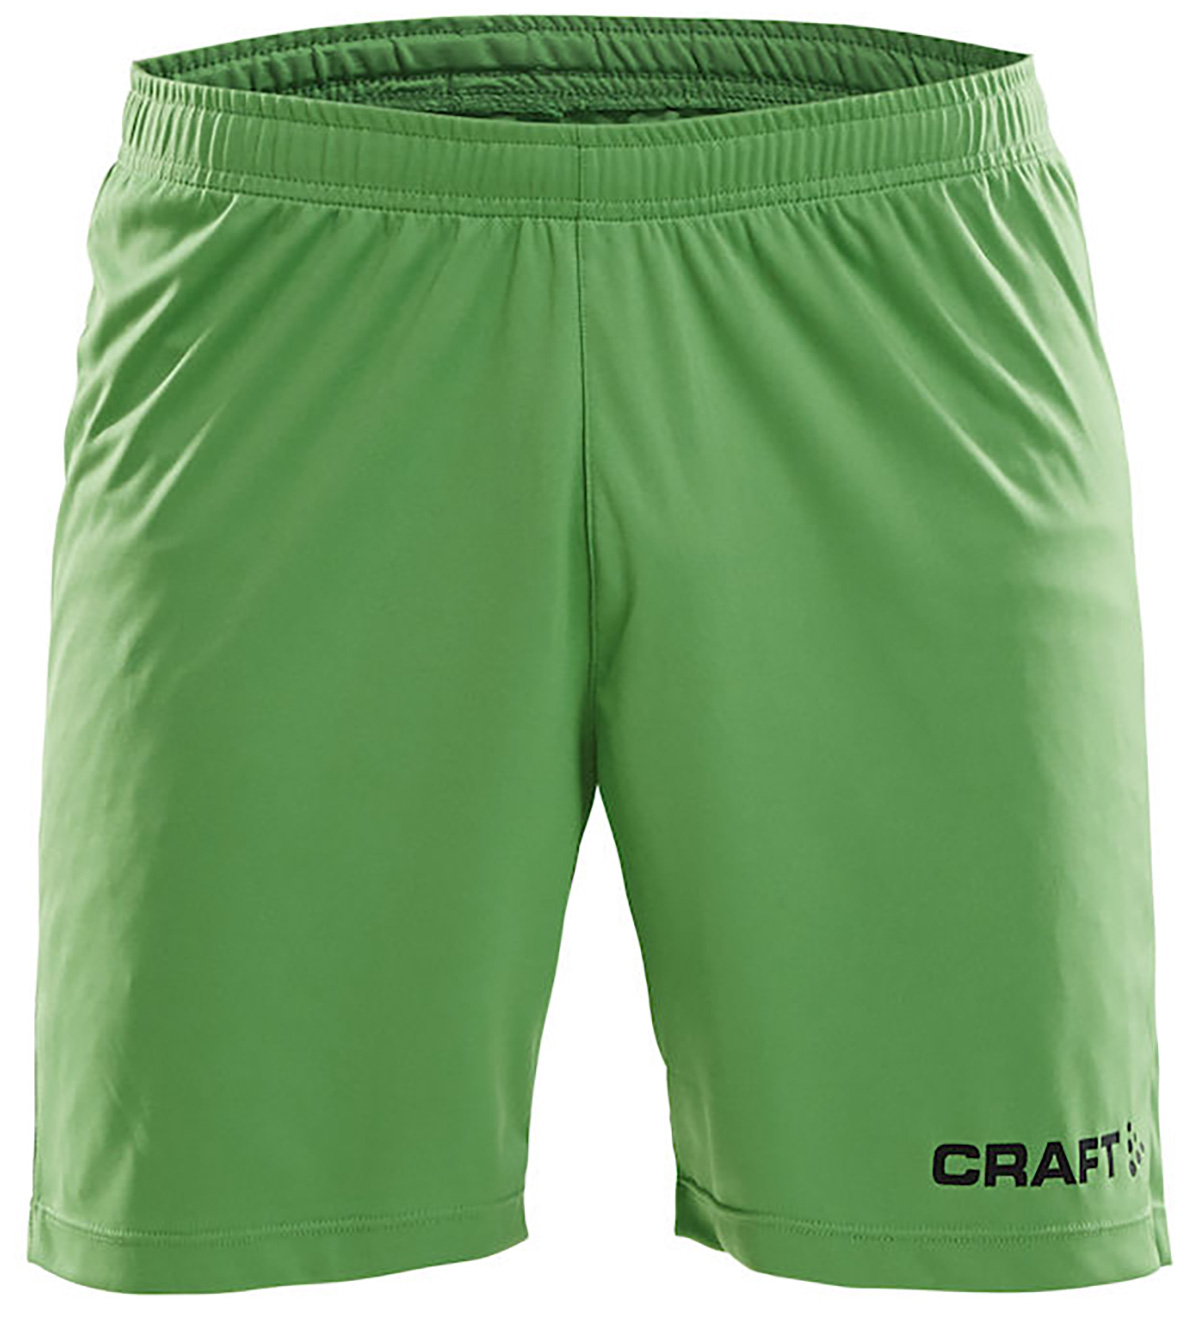 craft green